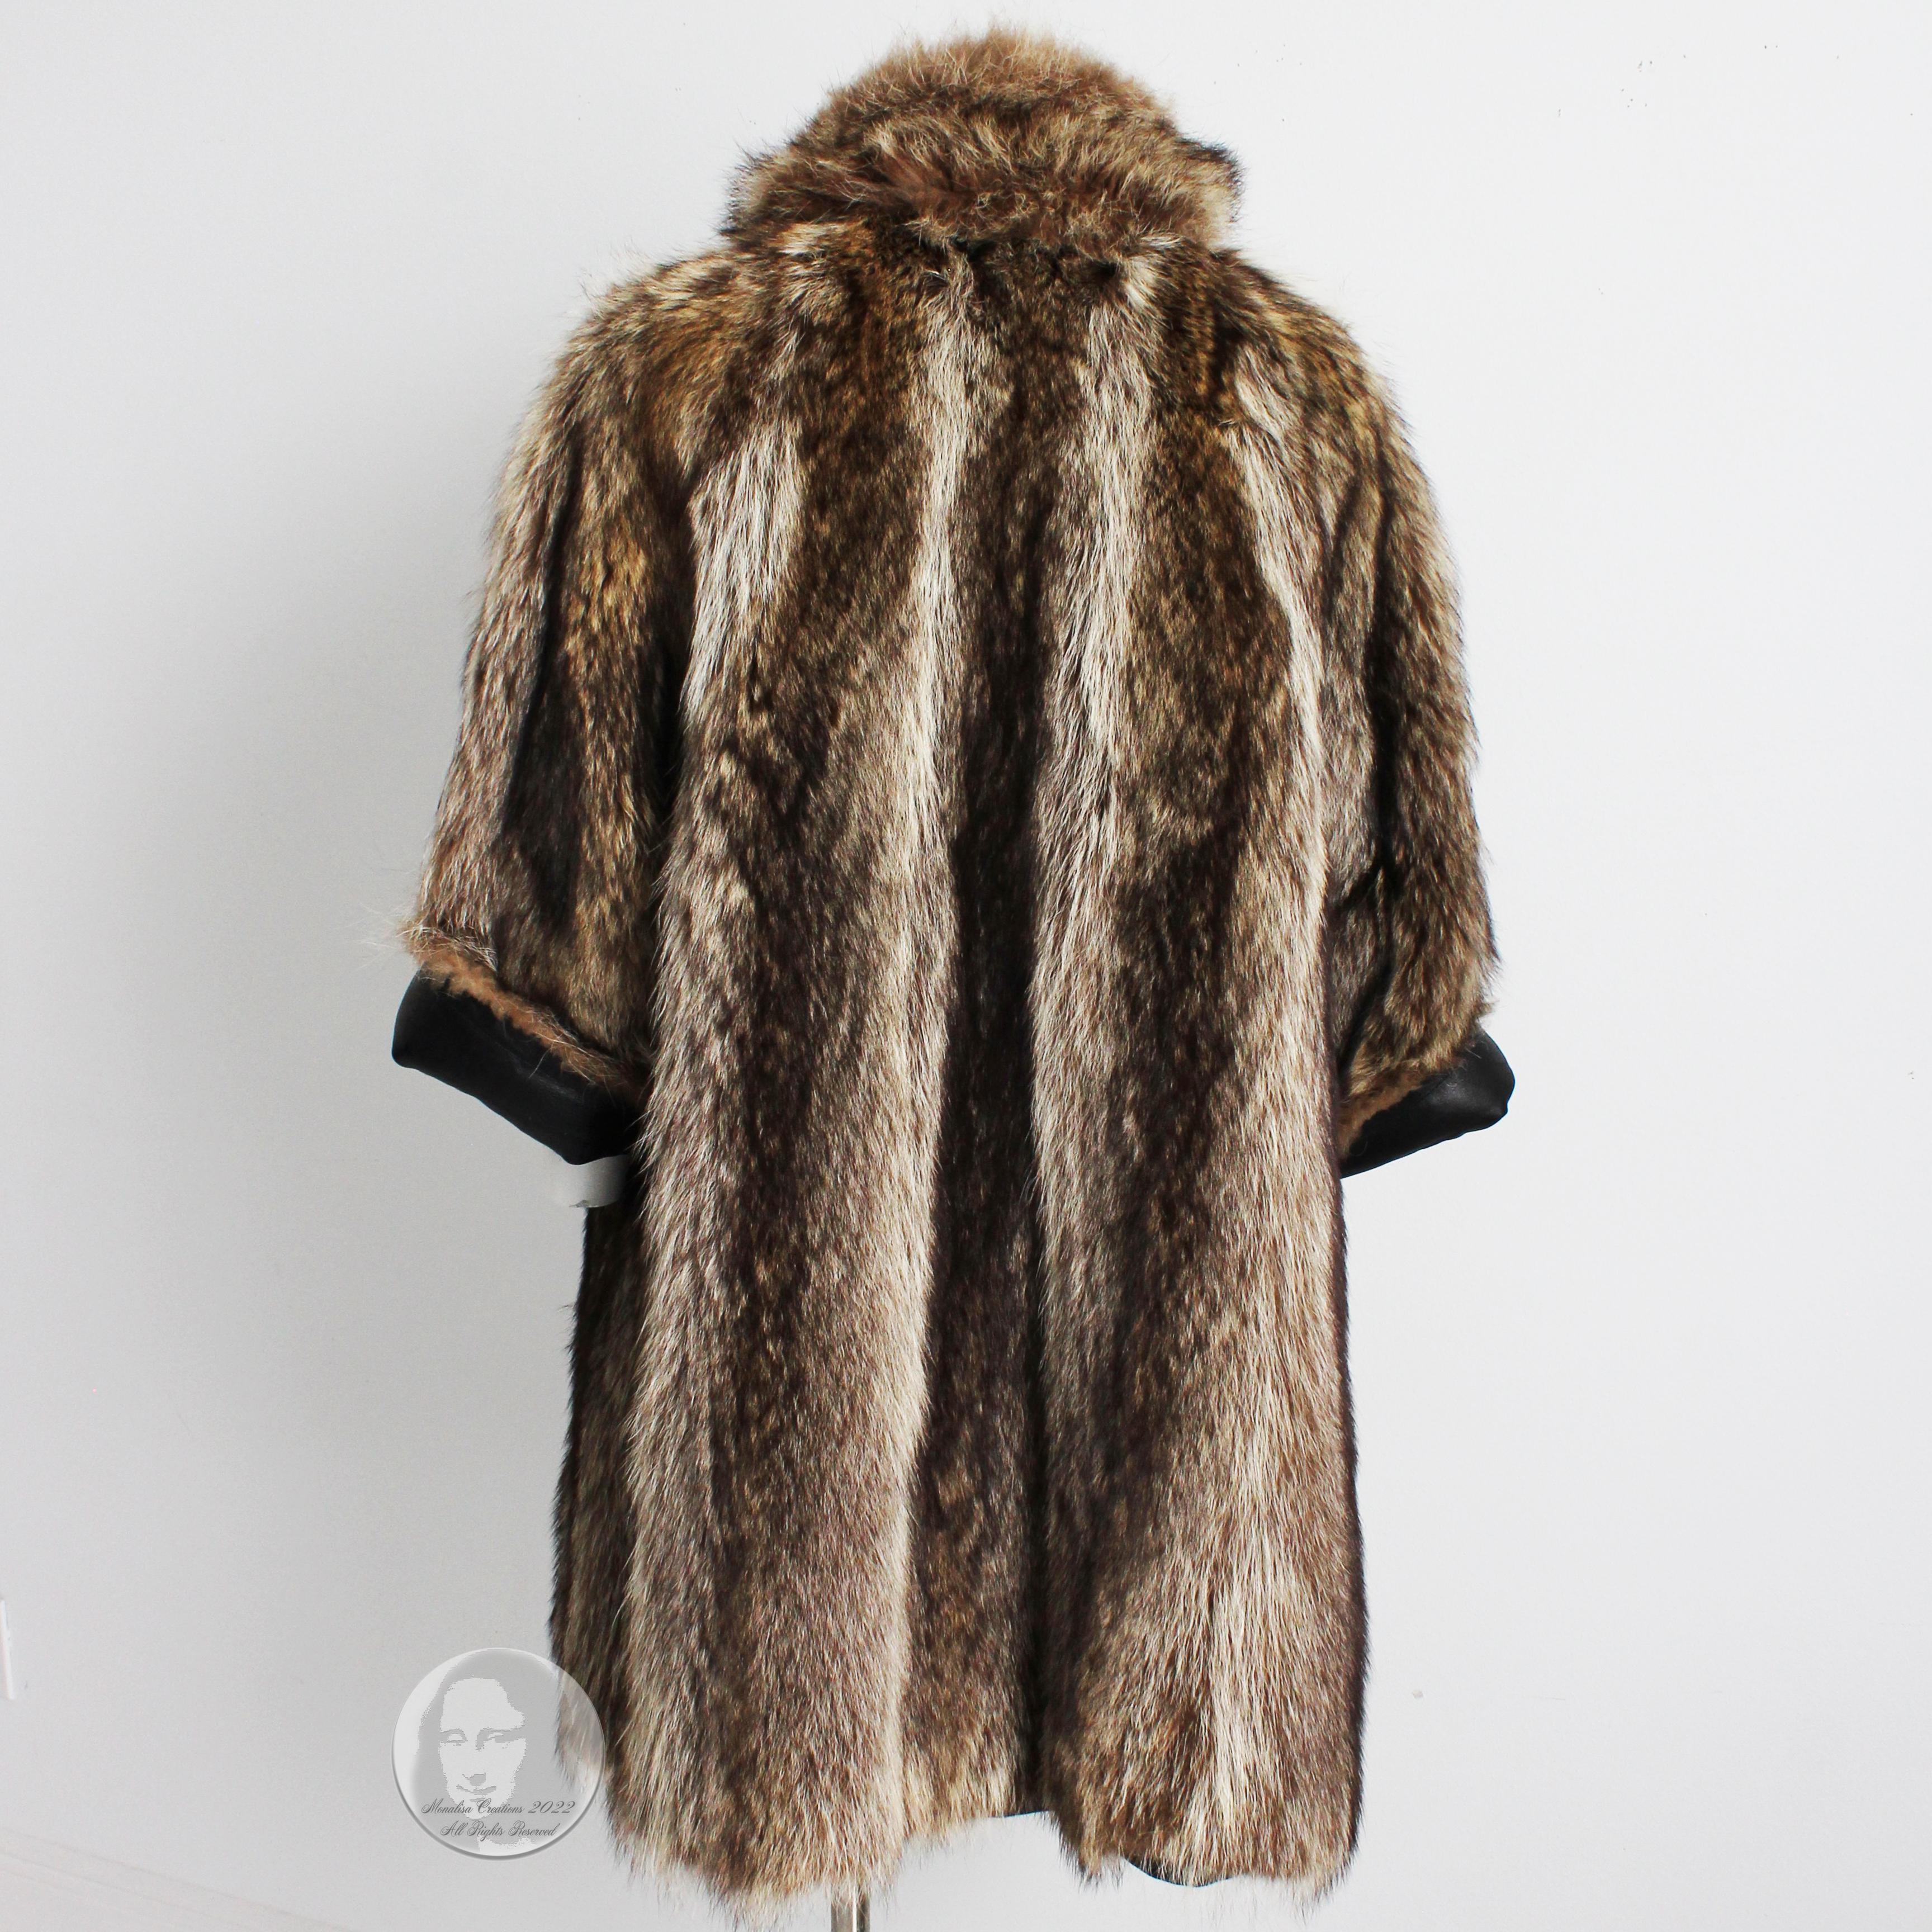 Bonnie Cashin for Sills Coat Black Leather Reversible Raccoon Fur Vintage 1960s  For Sale 5